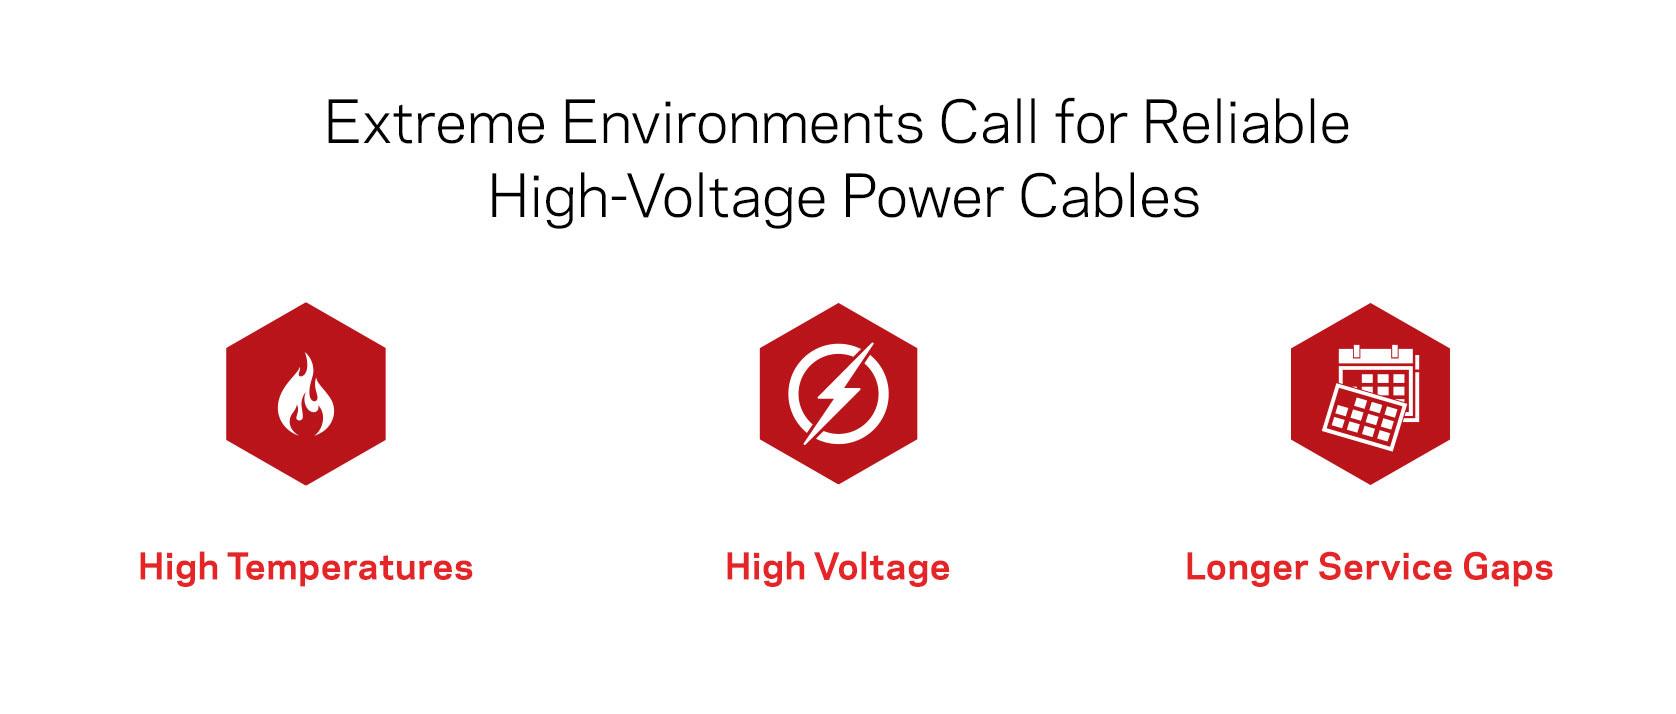 high temperature, high voltage, longer service gaps